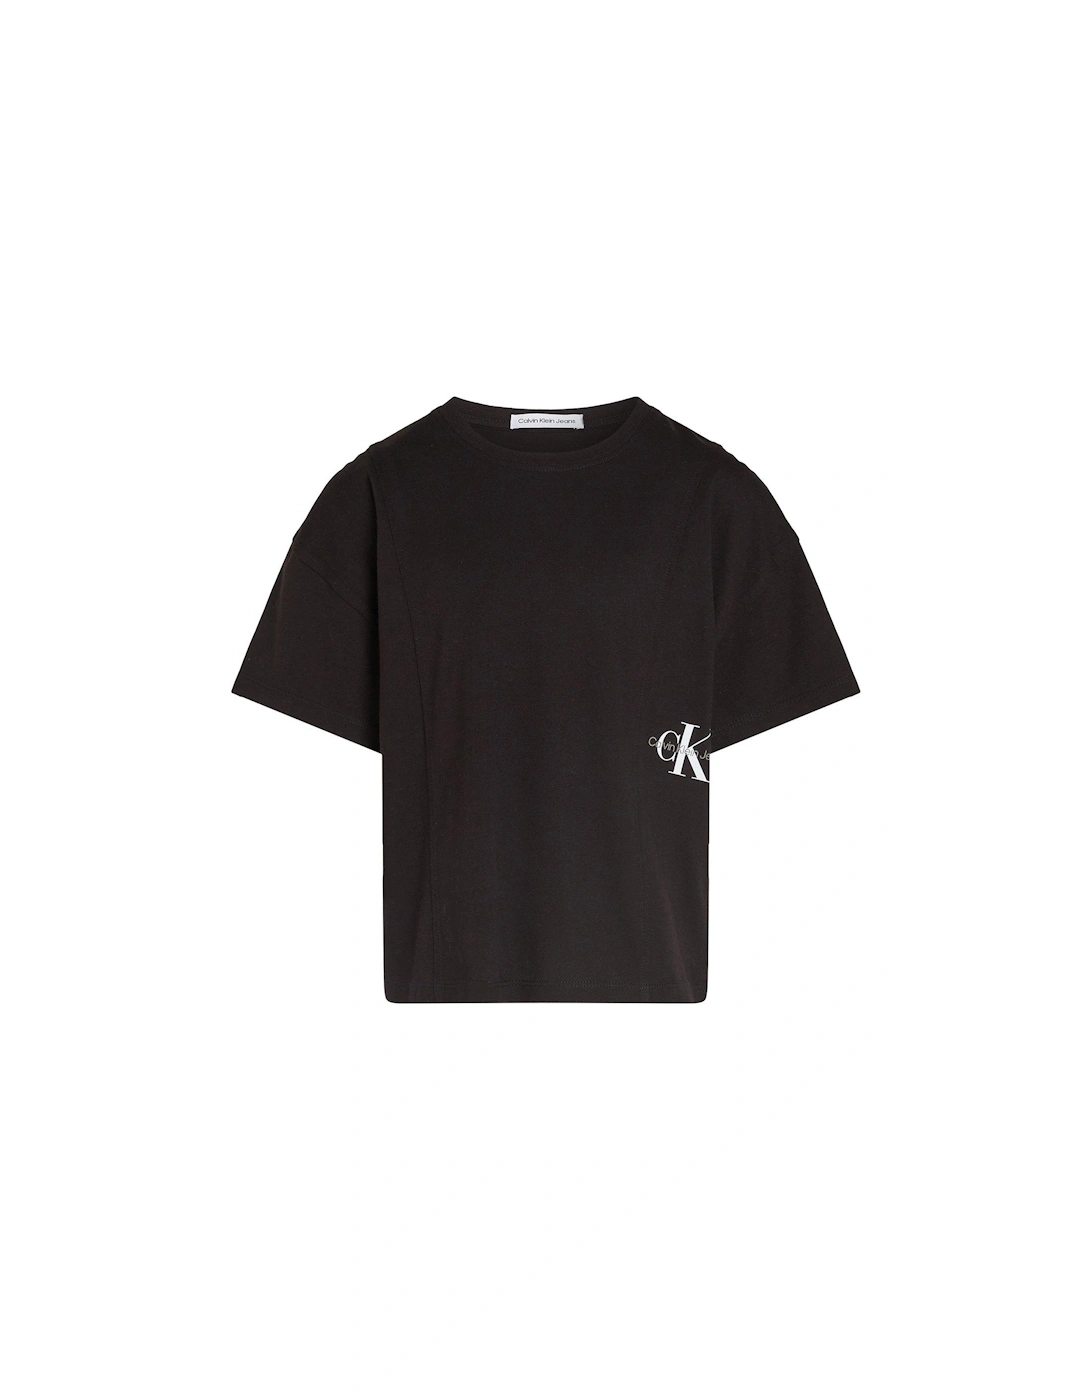 Jeans Girls Relaxed Logo Short Sleeve T-shirt - CK Black, 3 of 2